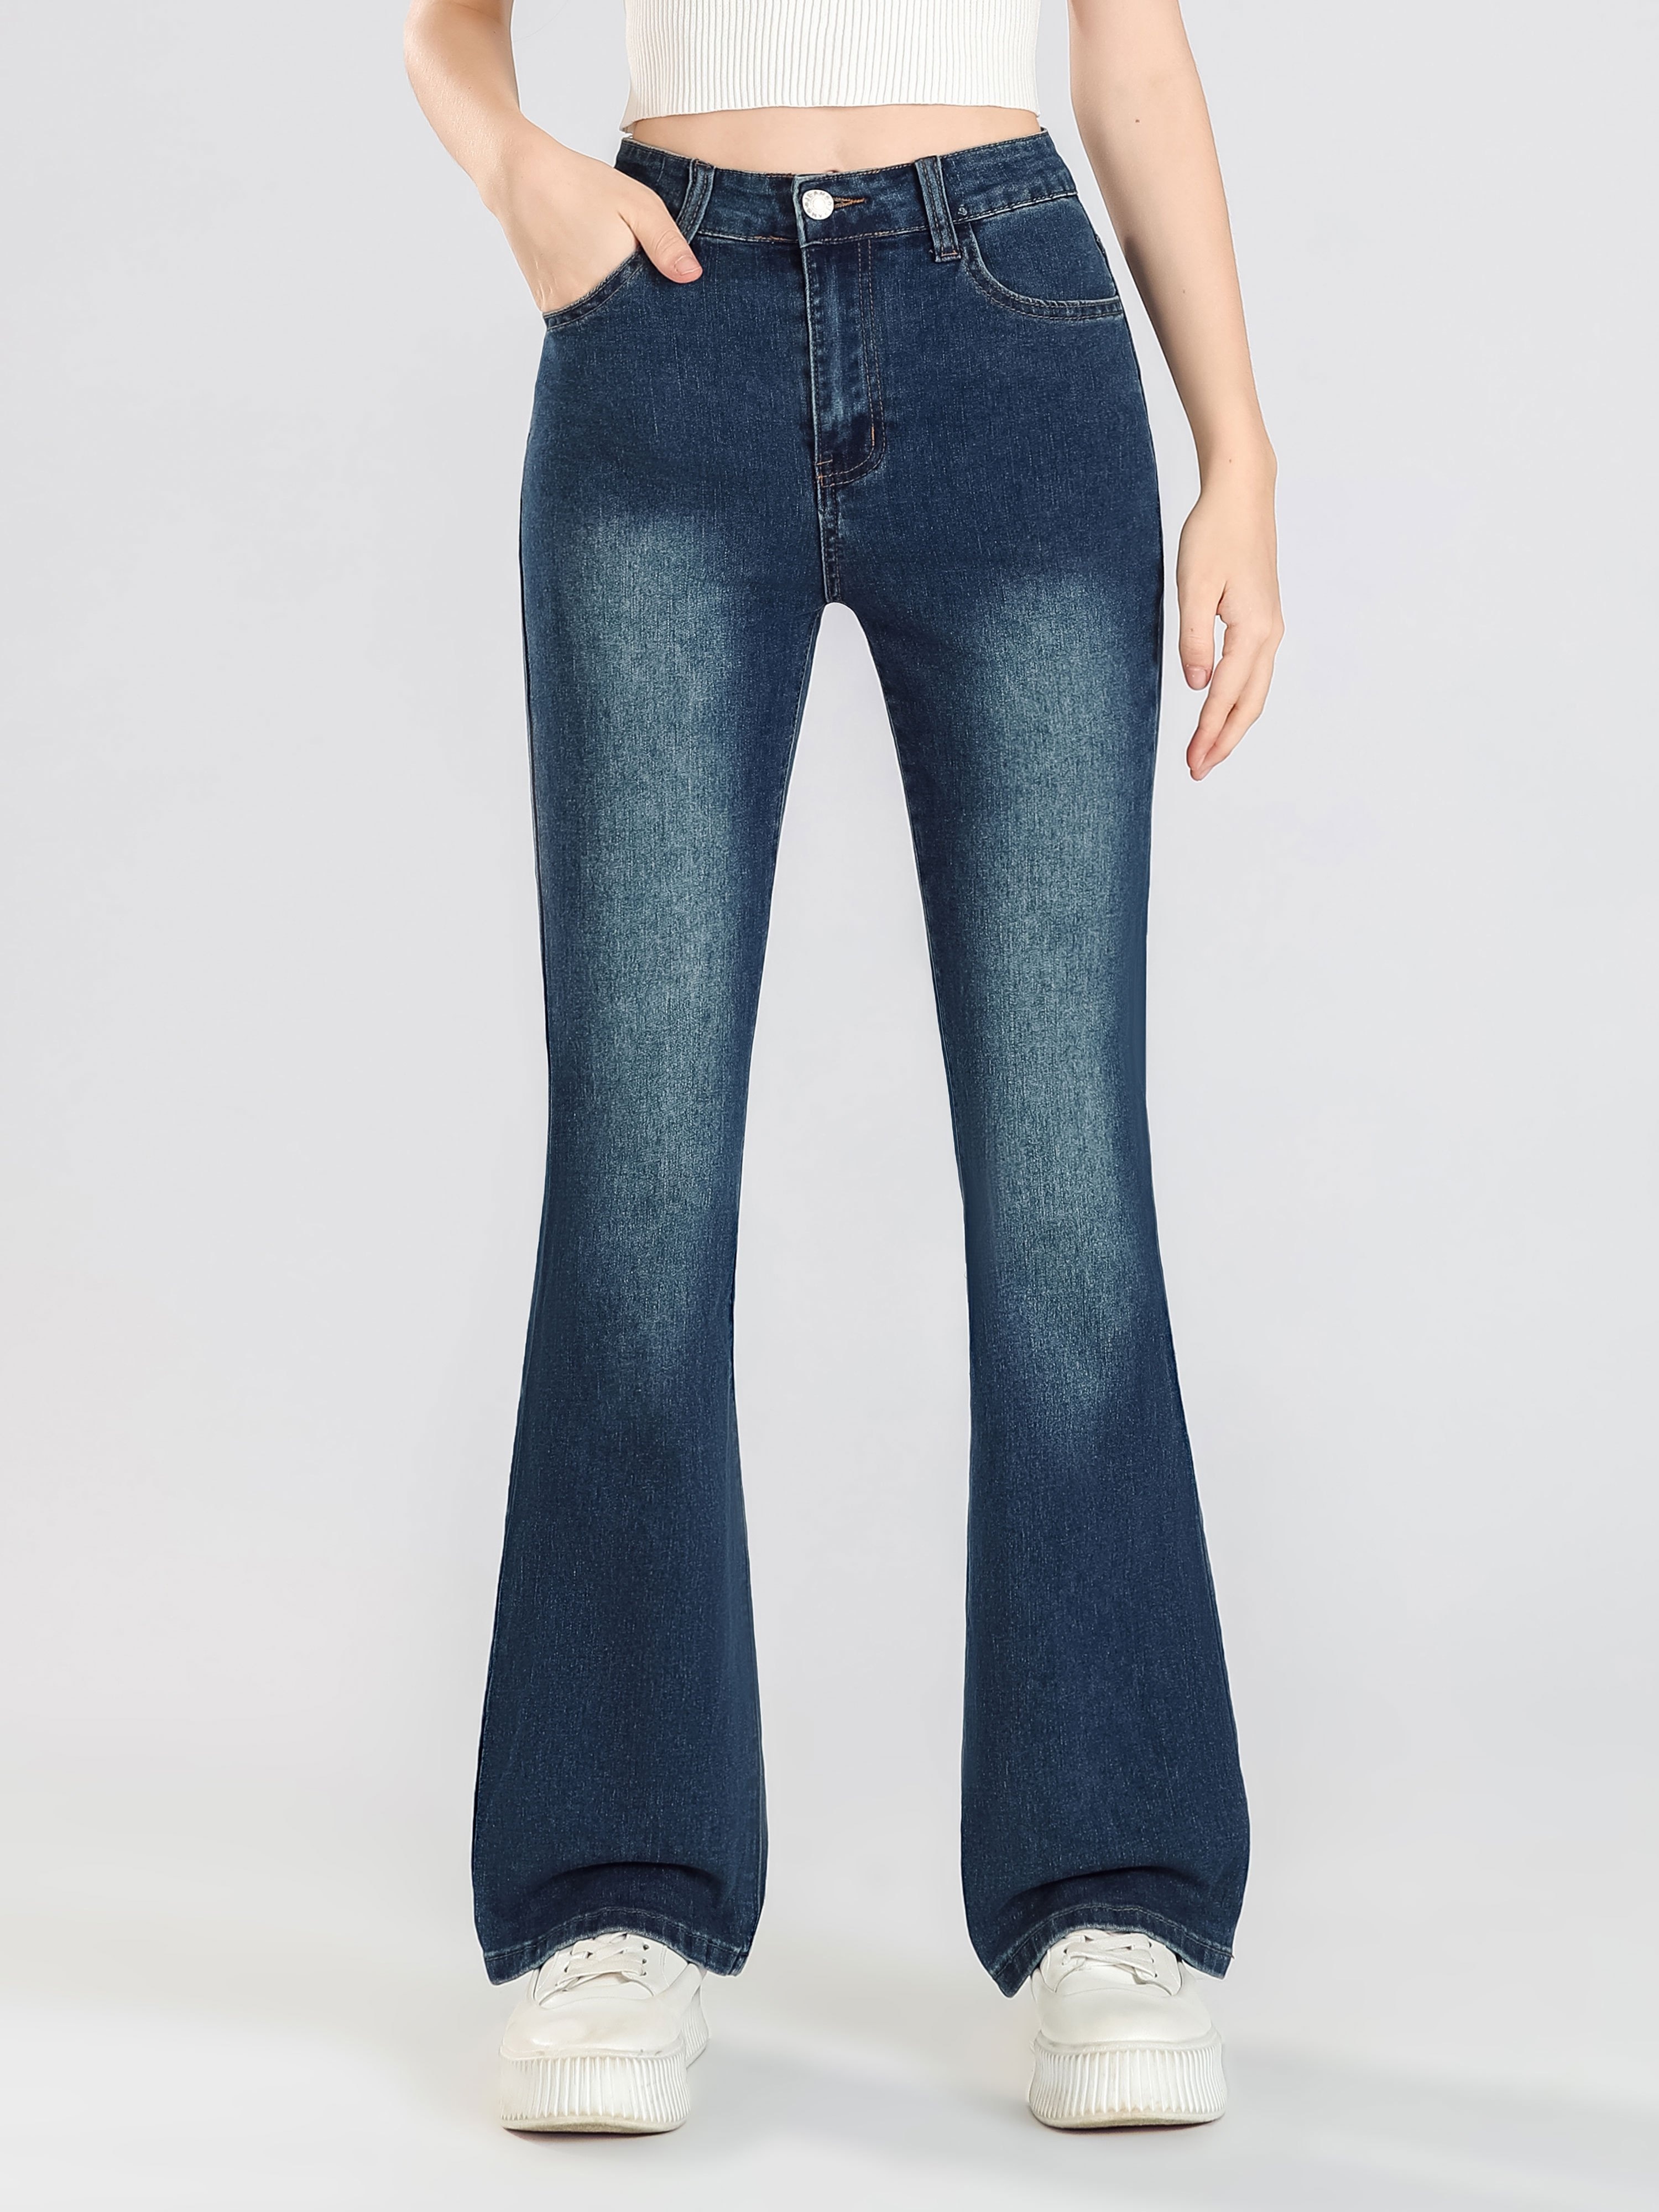 Women's High Waist Slim Fit Flare Leg Pants, Retro Solid Flared Jeans,  Stretch Denim Pants